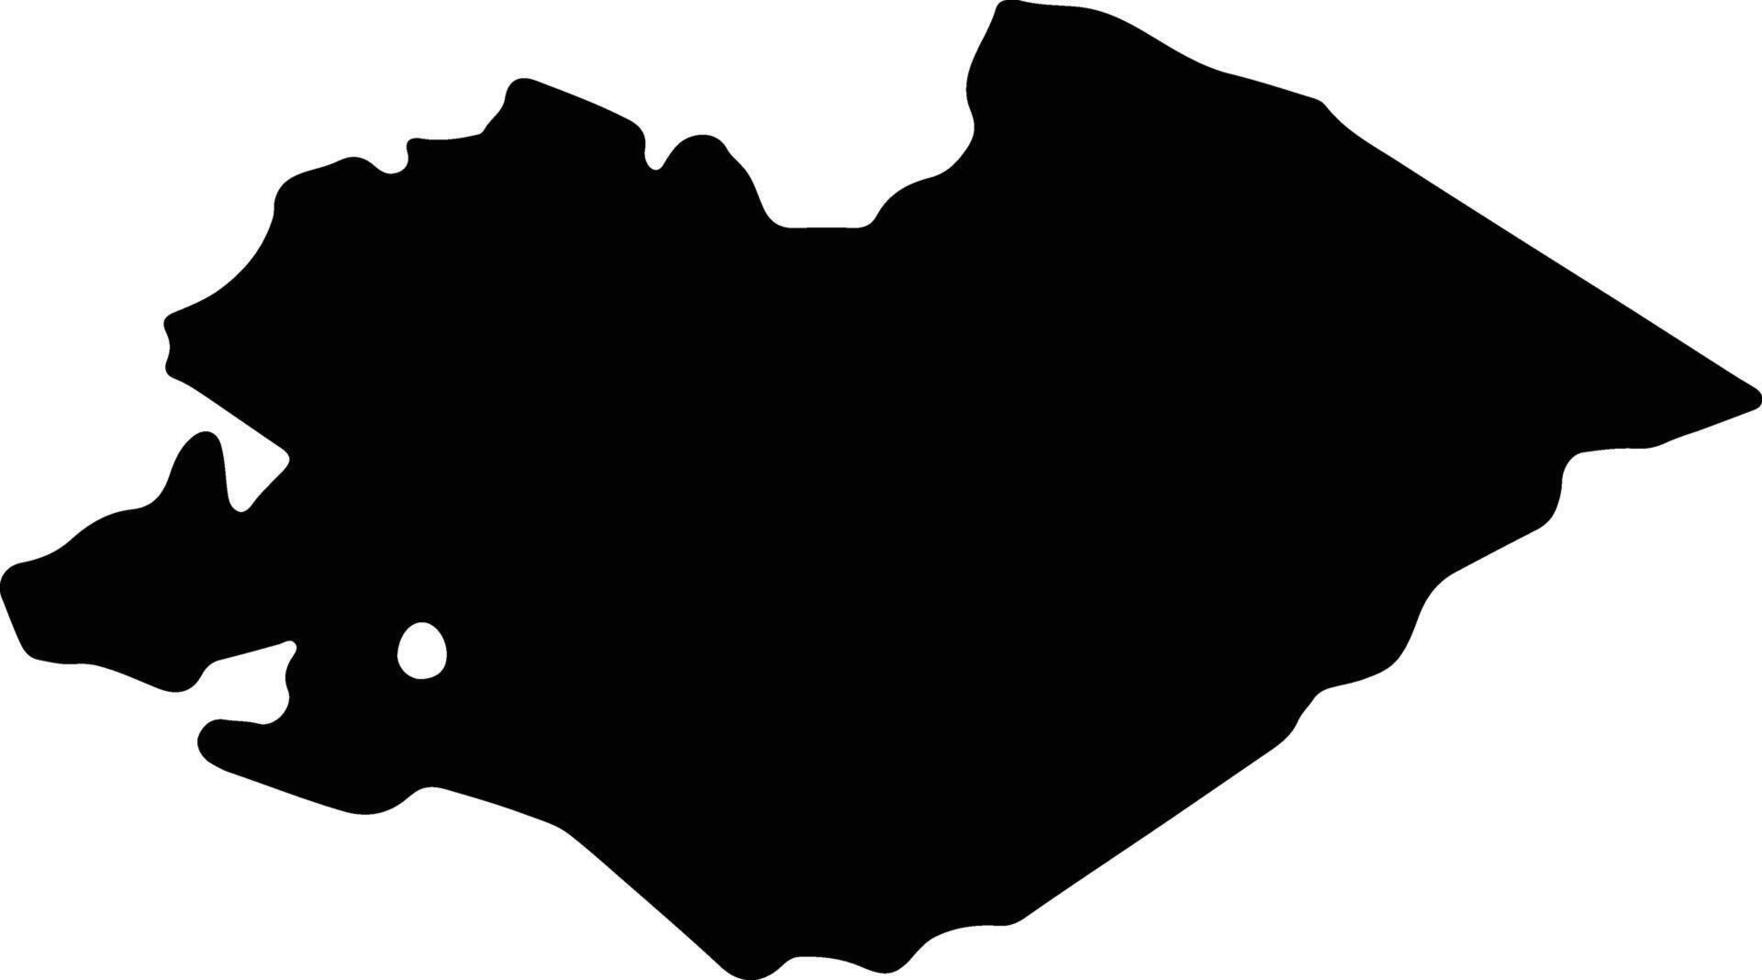 Pesaro e Urbino Italy silhouette map vector